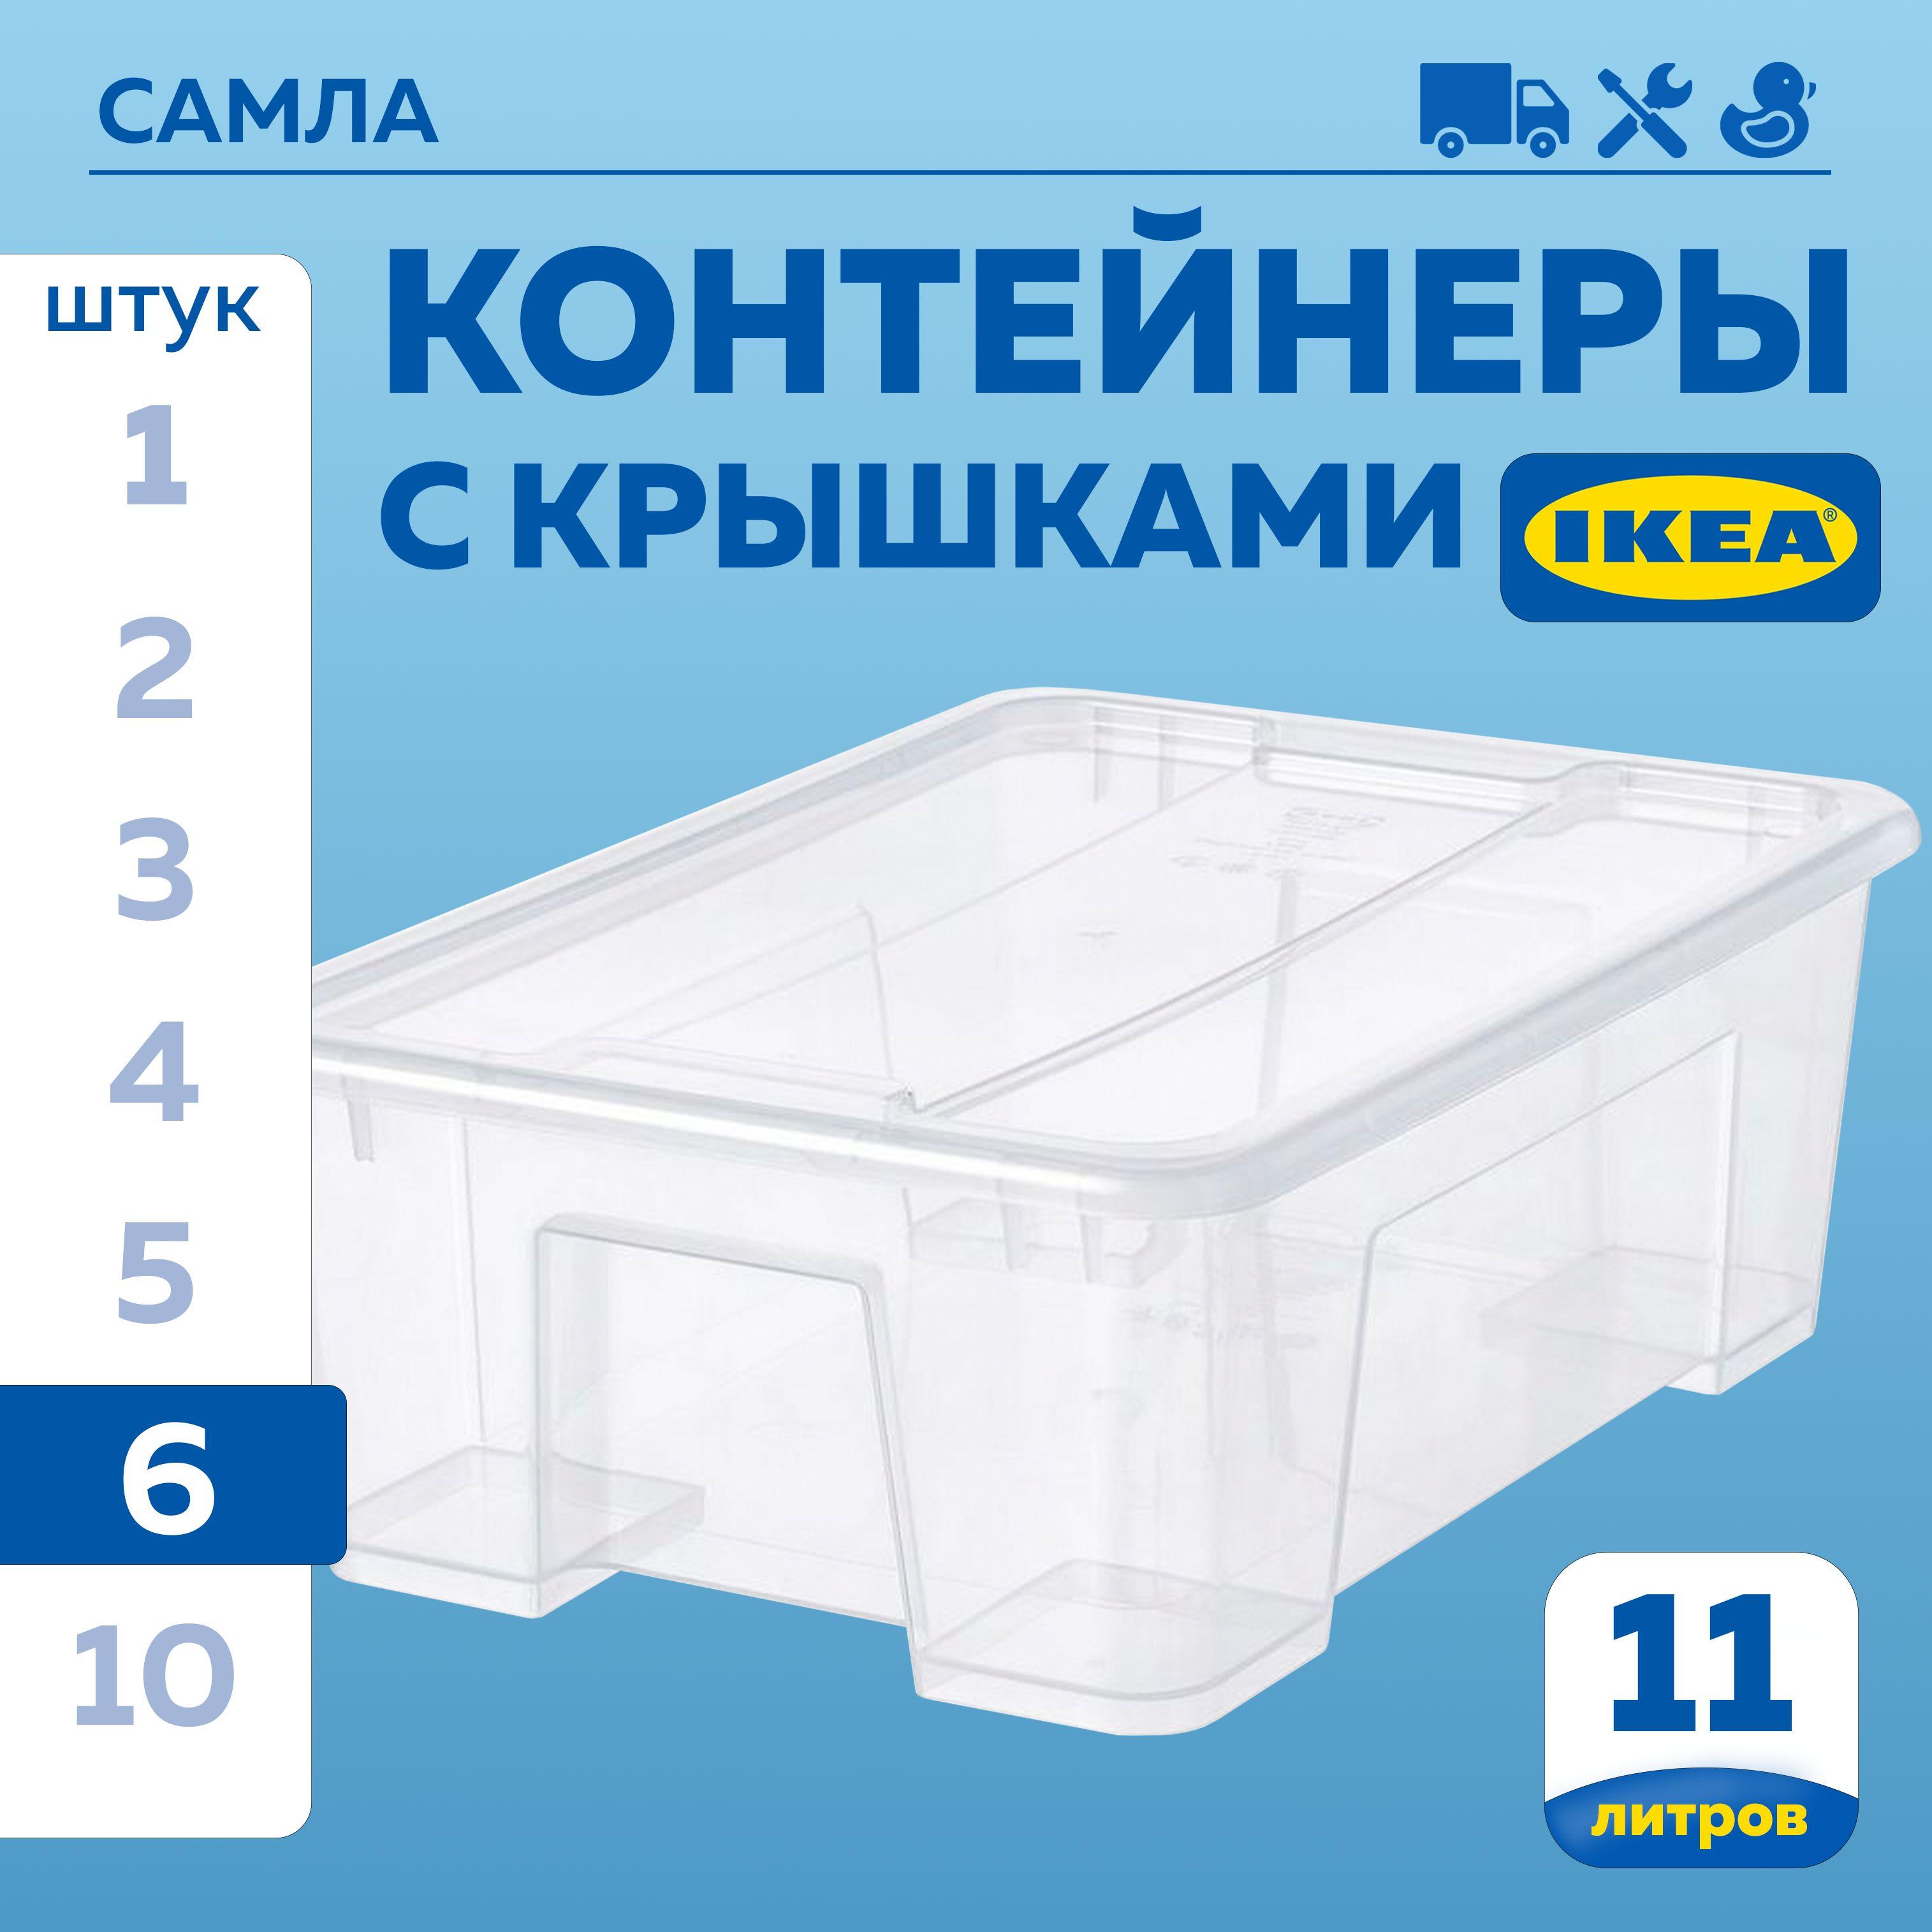 Контейнер для хранения ИКЕА САМЛА (IKEA SAMLA), 39х28х14 см, 11 л, 6 шт, ящик для хранения с крышкой